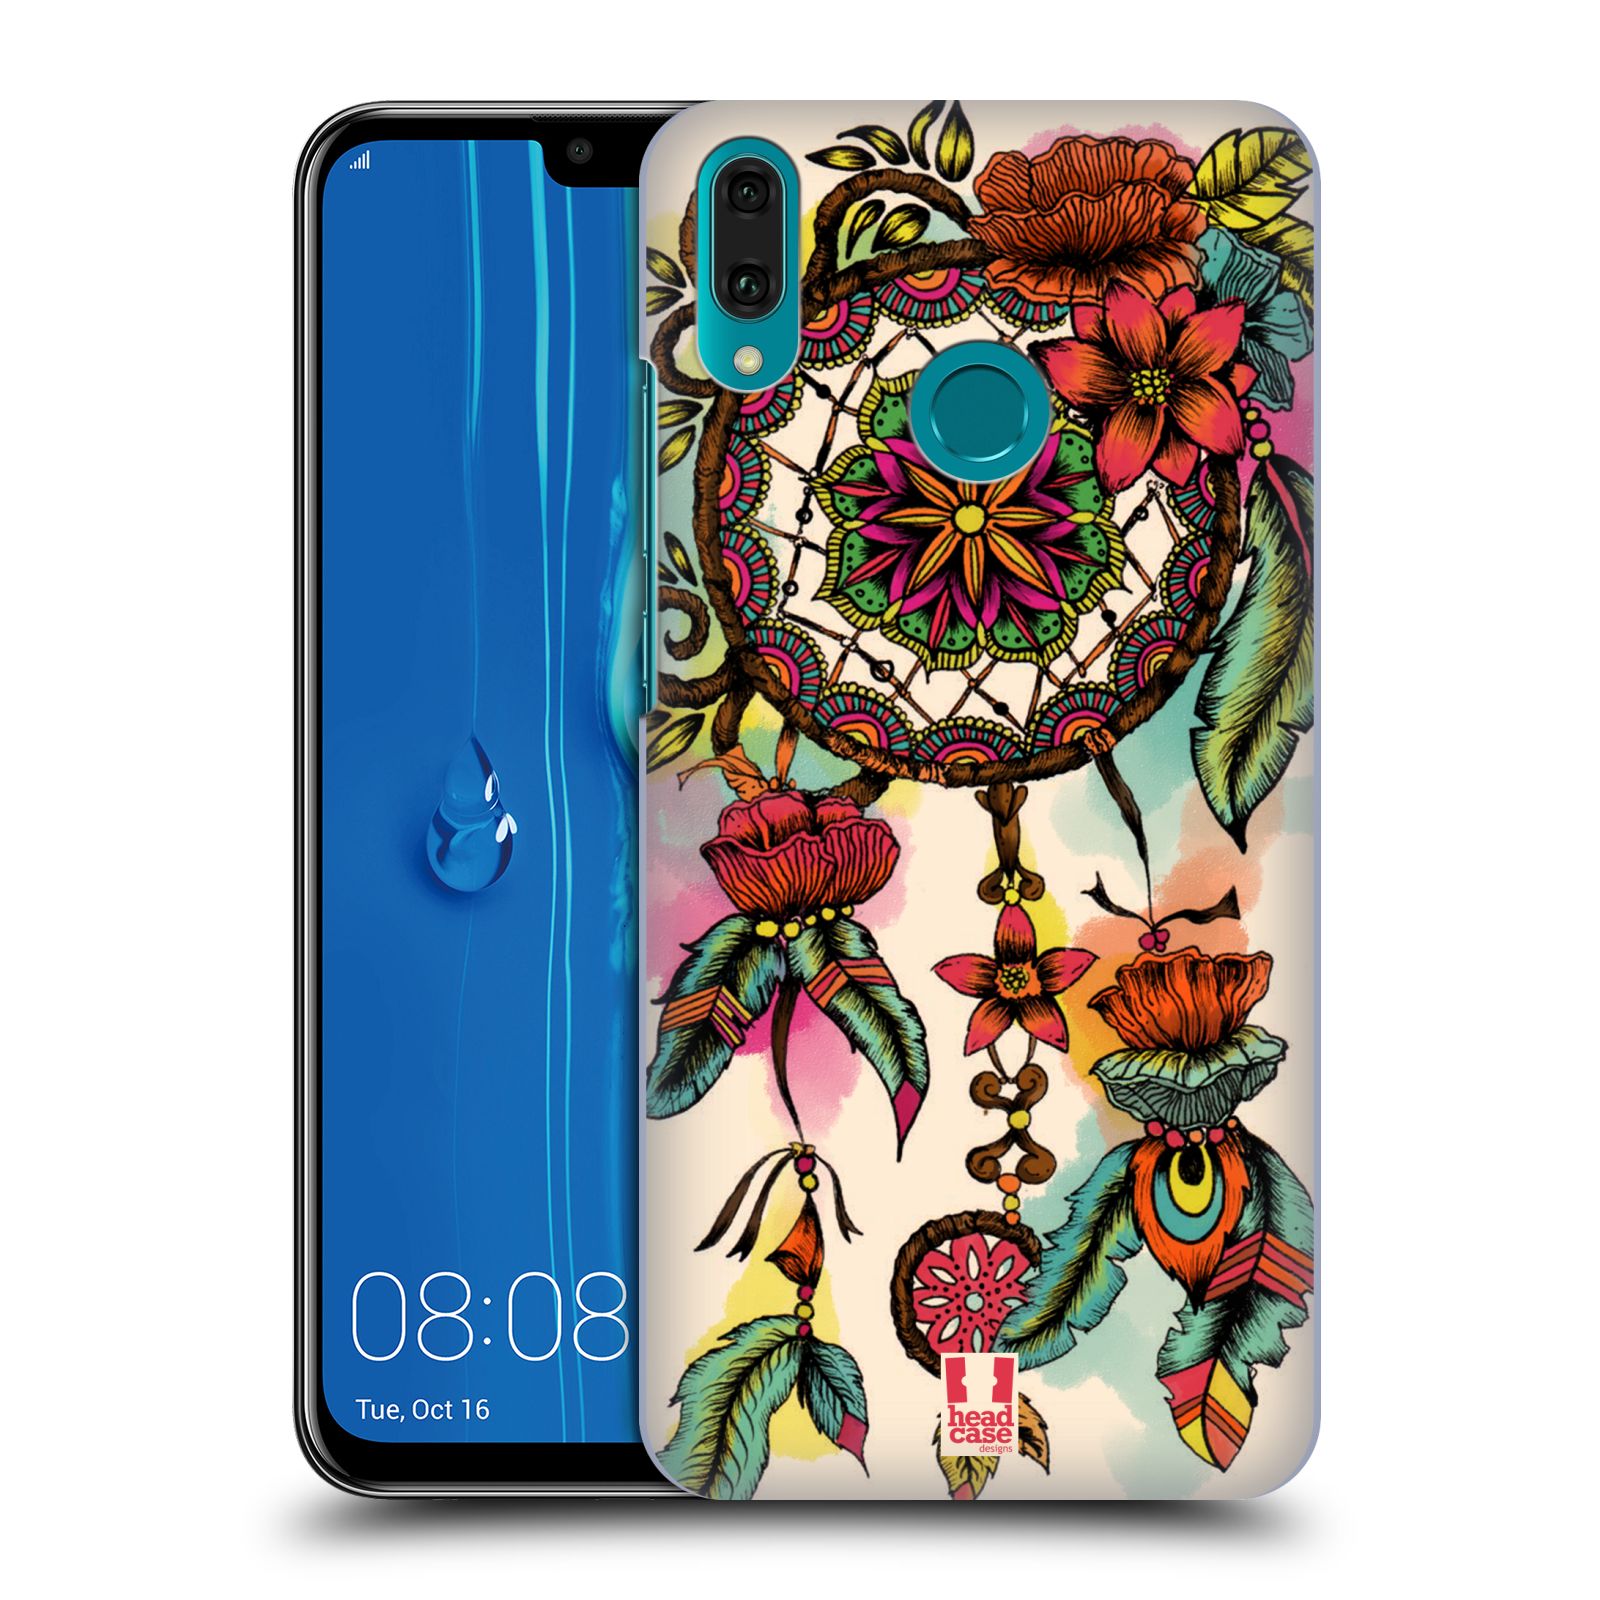 Pouzdro na mobil Huawei Y9 2019 - HEAD CASE - vzor Květy lapač snů FLORID